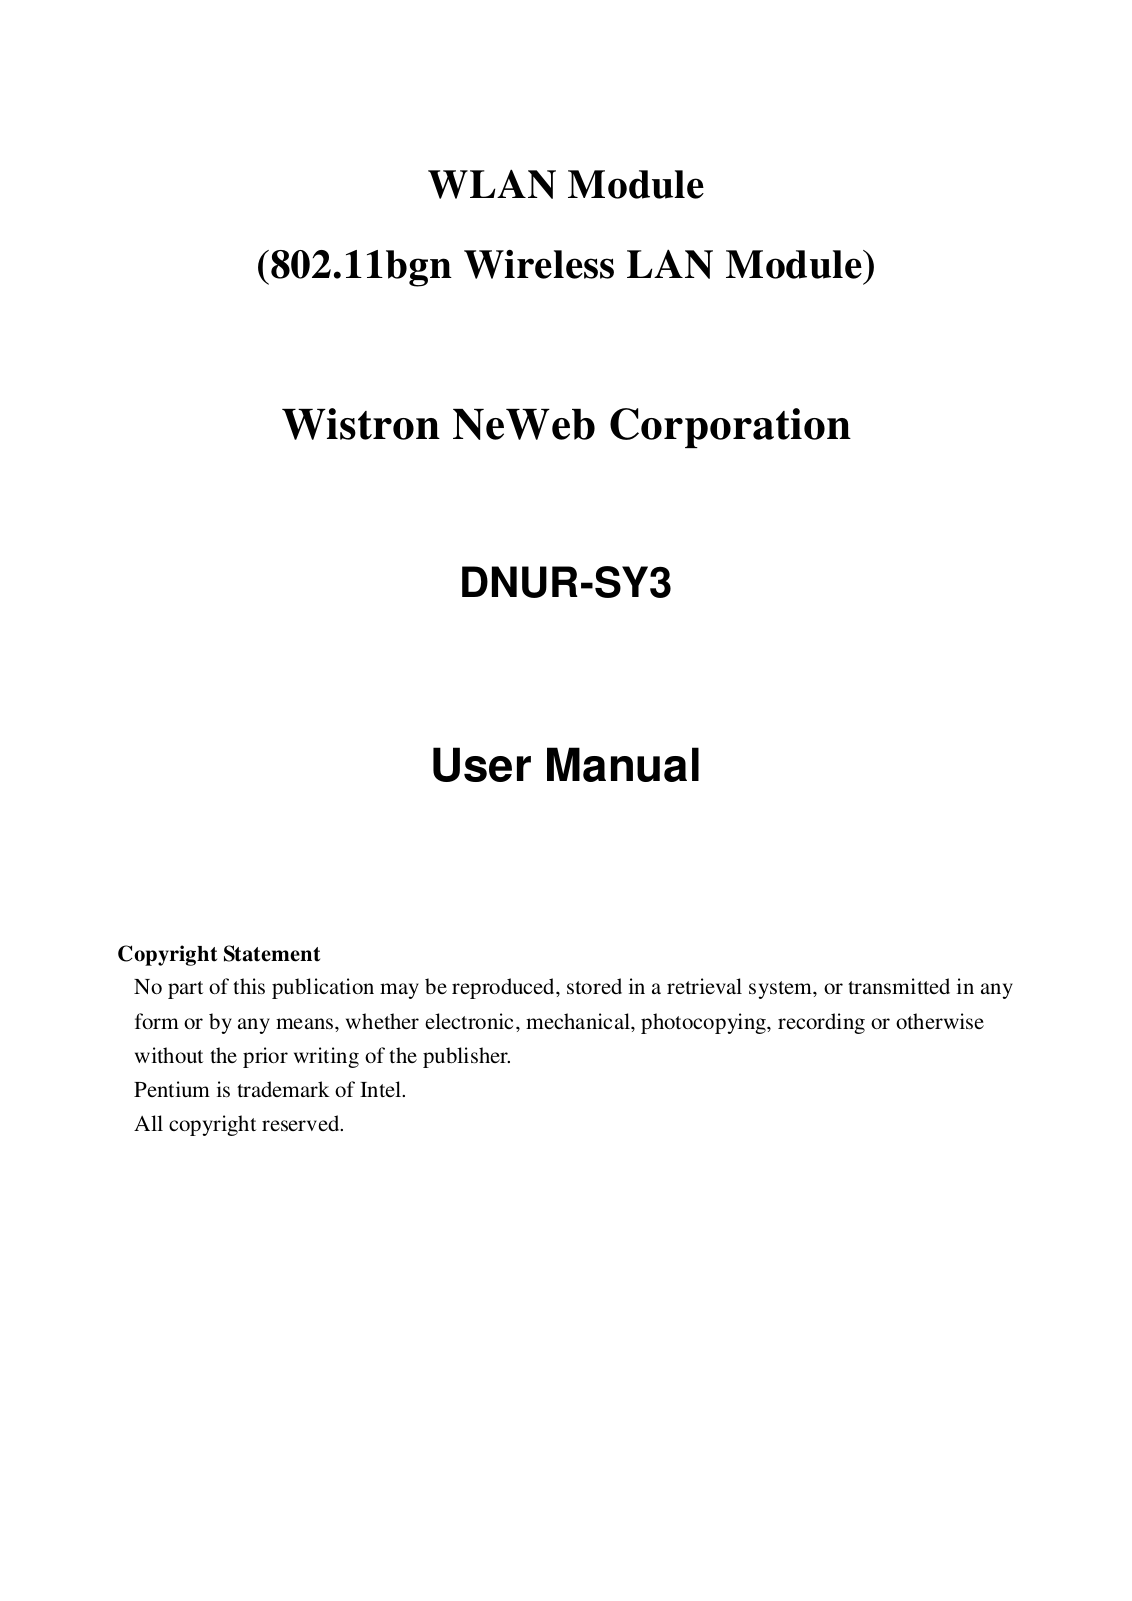 Sony DNURSY3 Users Manual